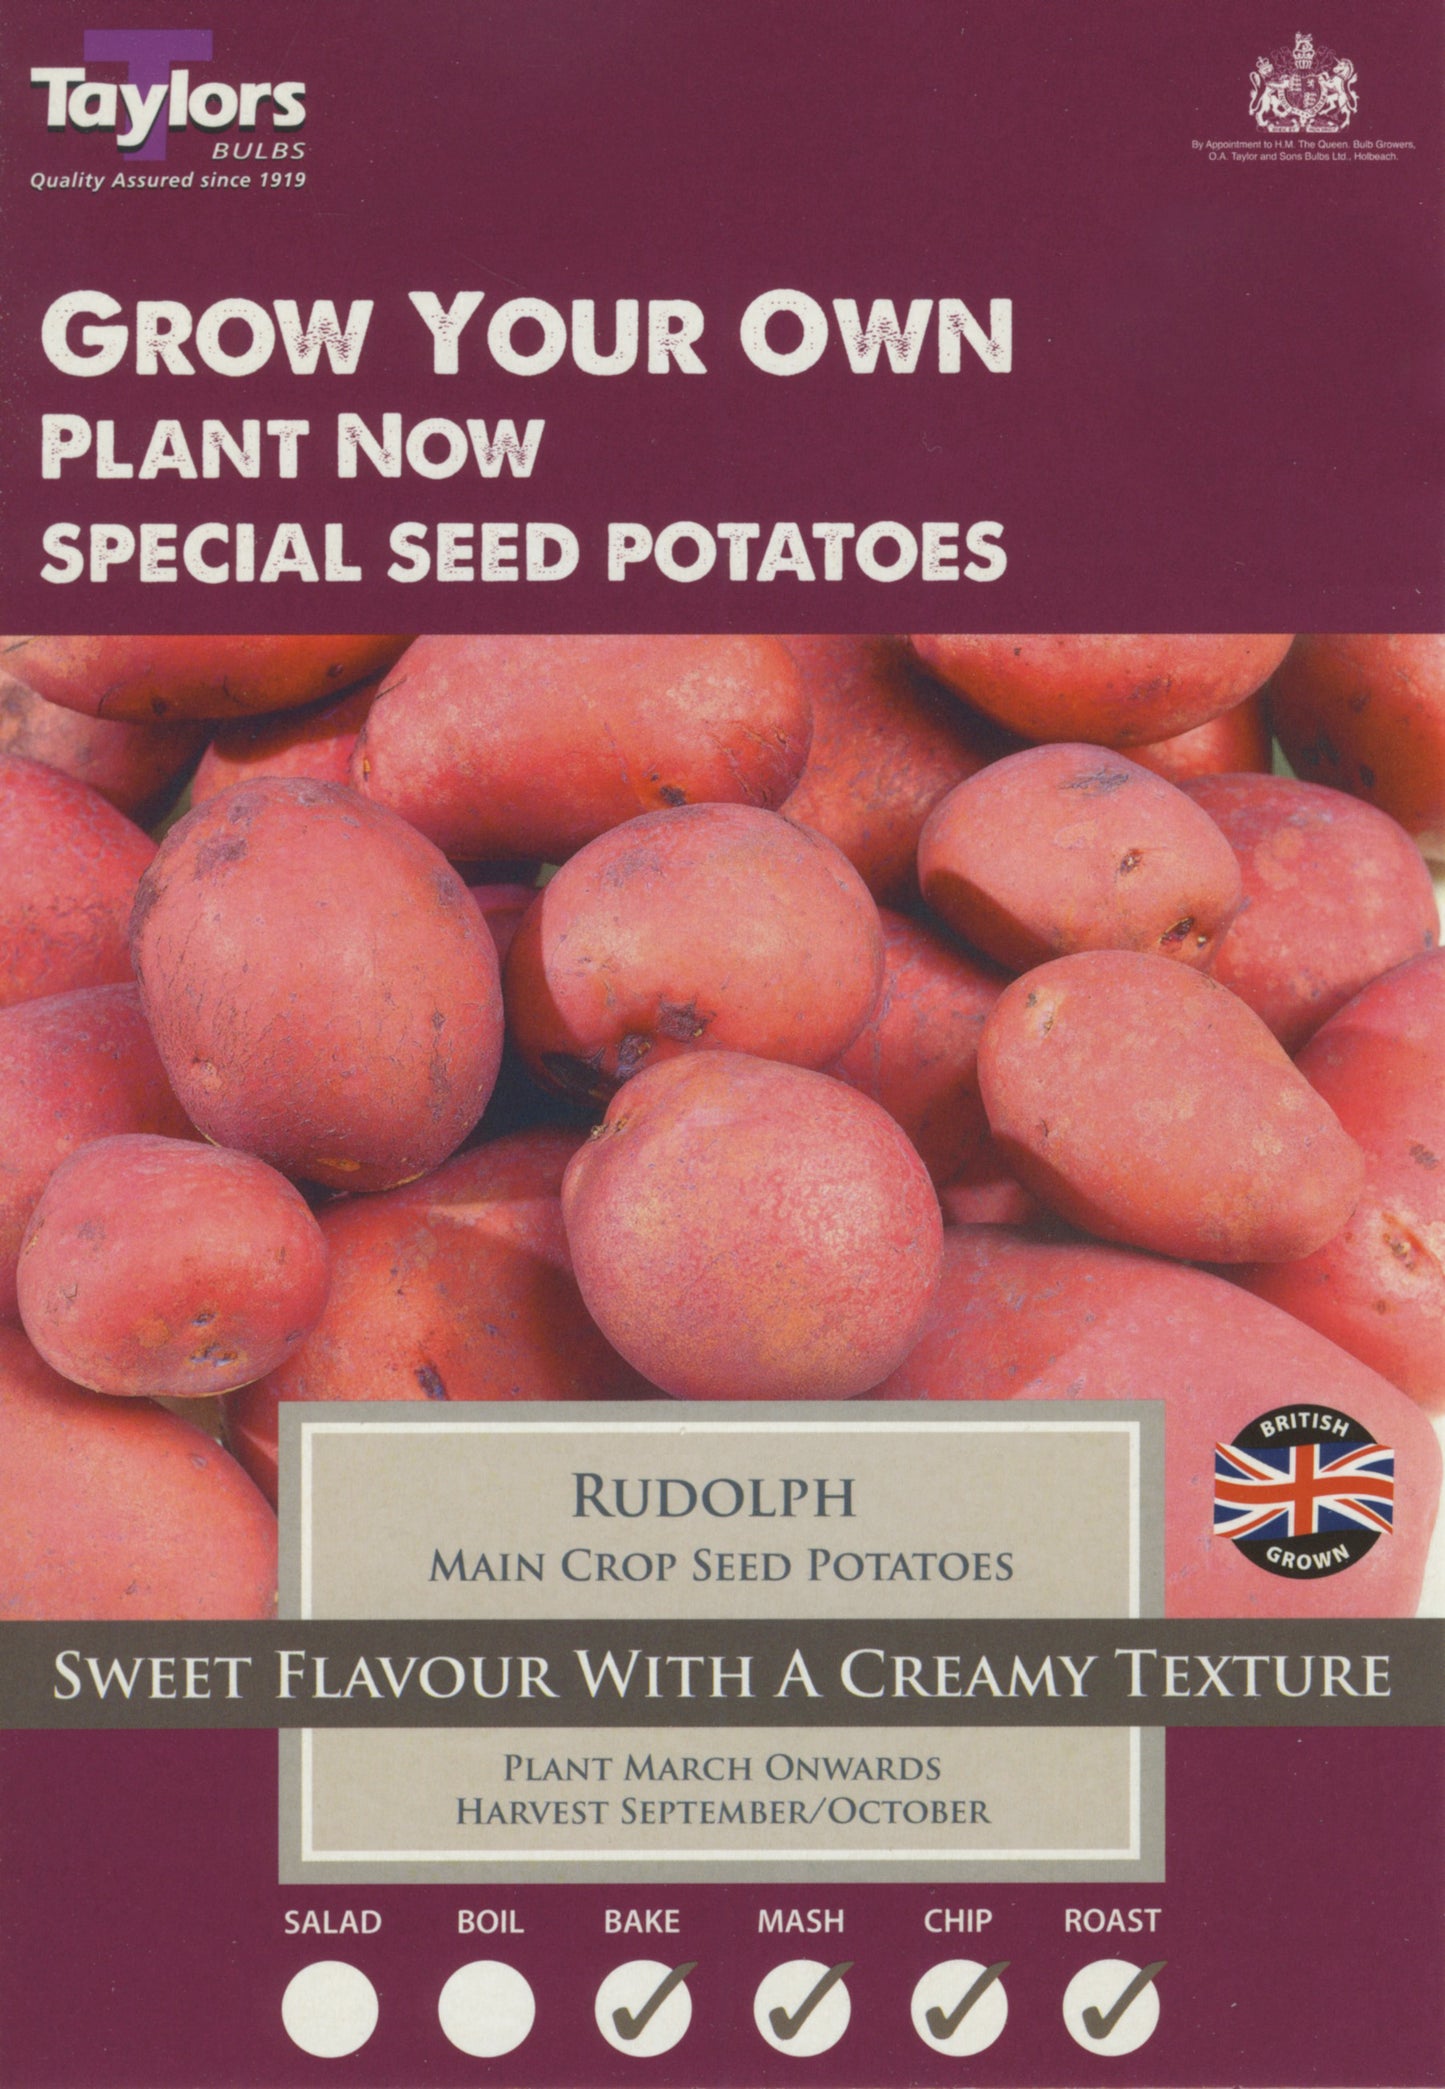 Taylors - Seed Potatoes - Rudolph - 10 Tubers - Main Crop